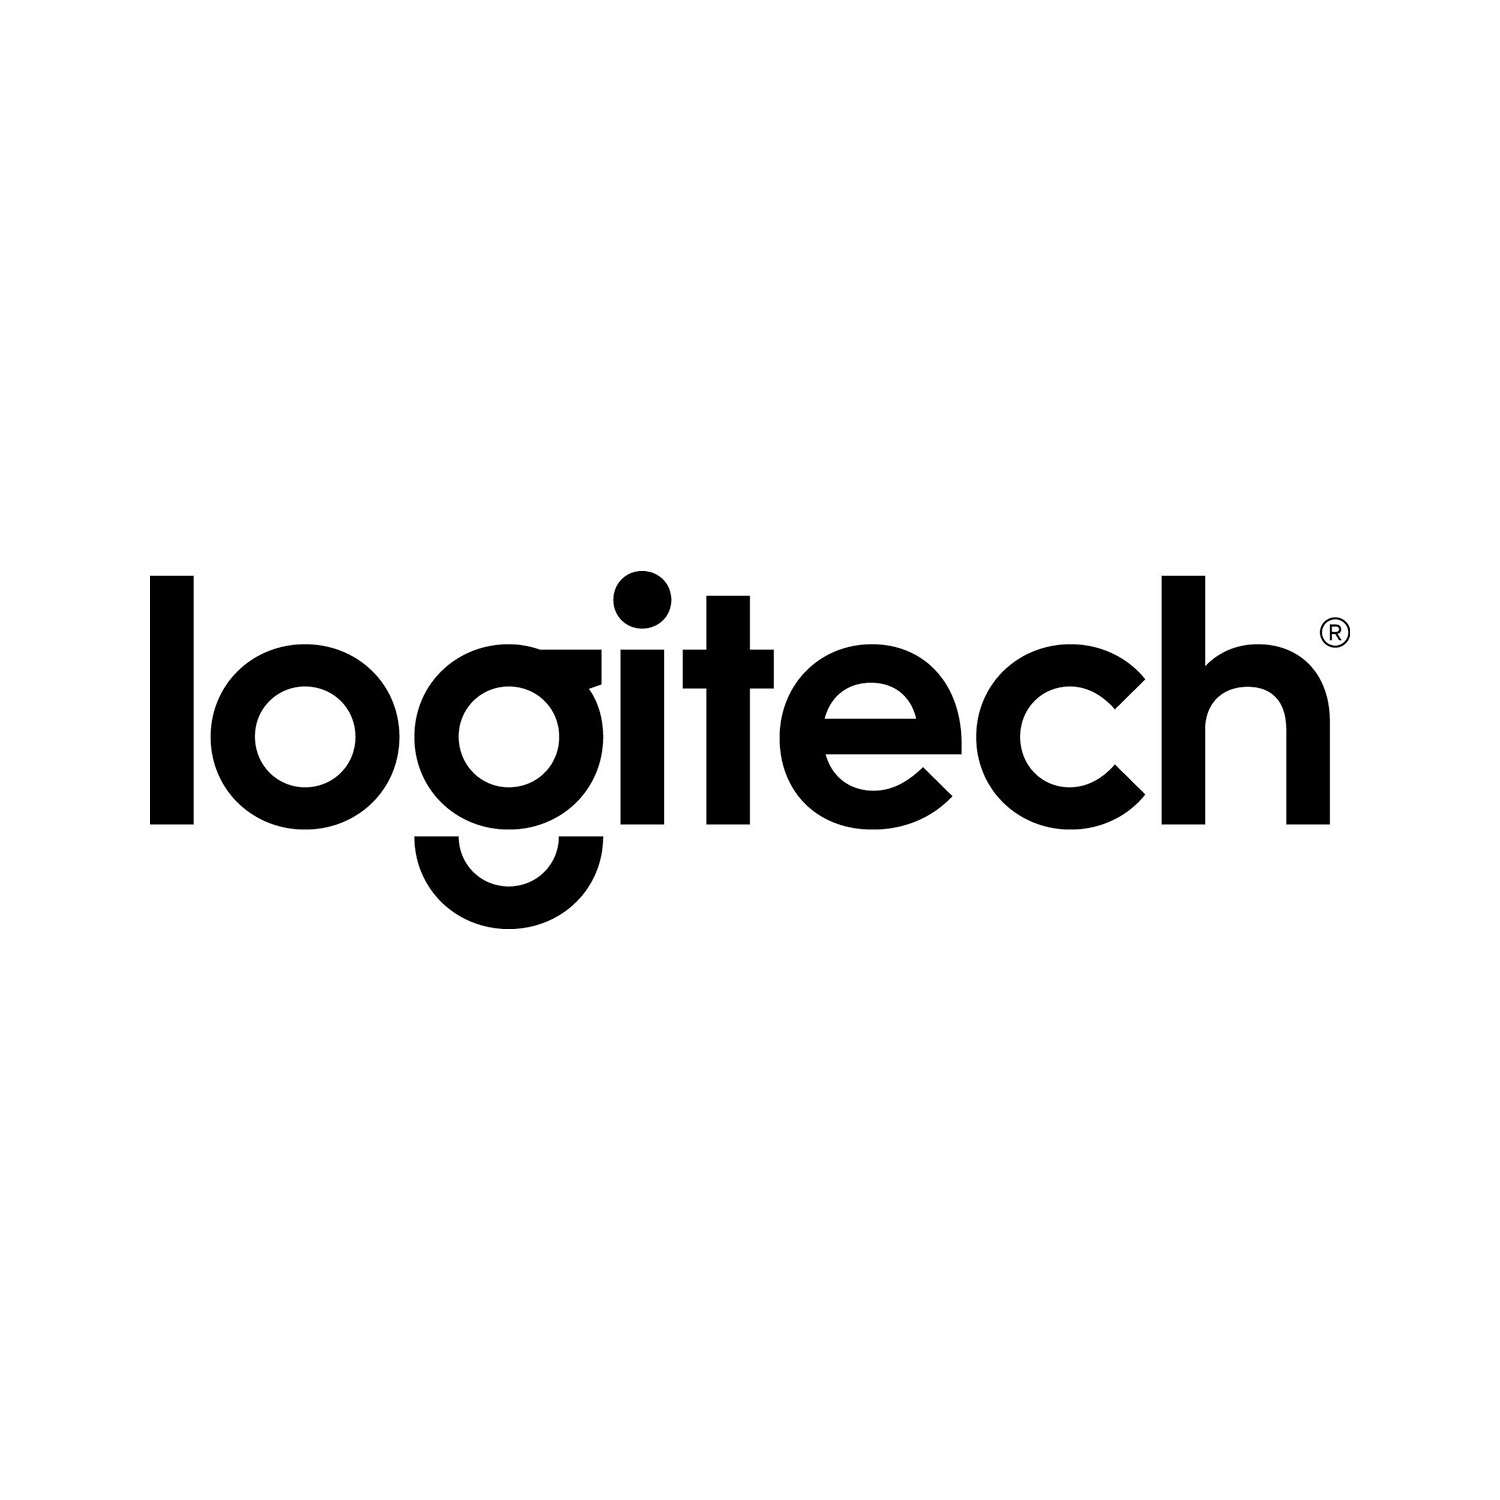 logitech_logo_gallery.jpg